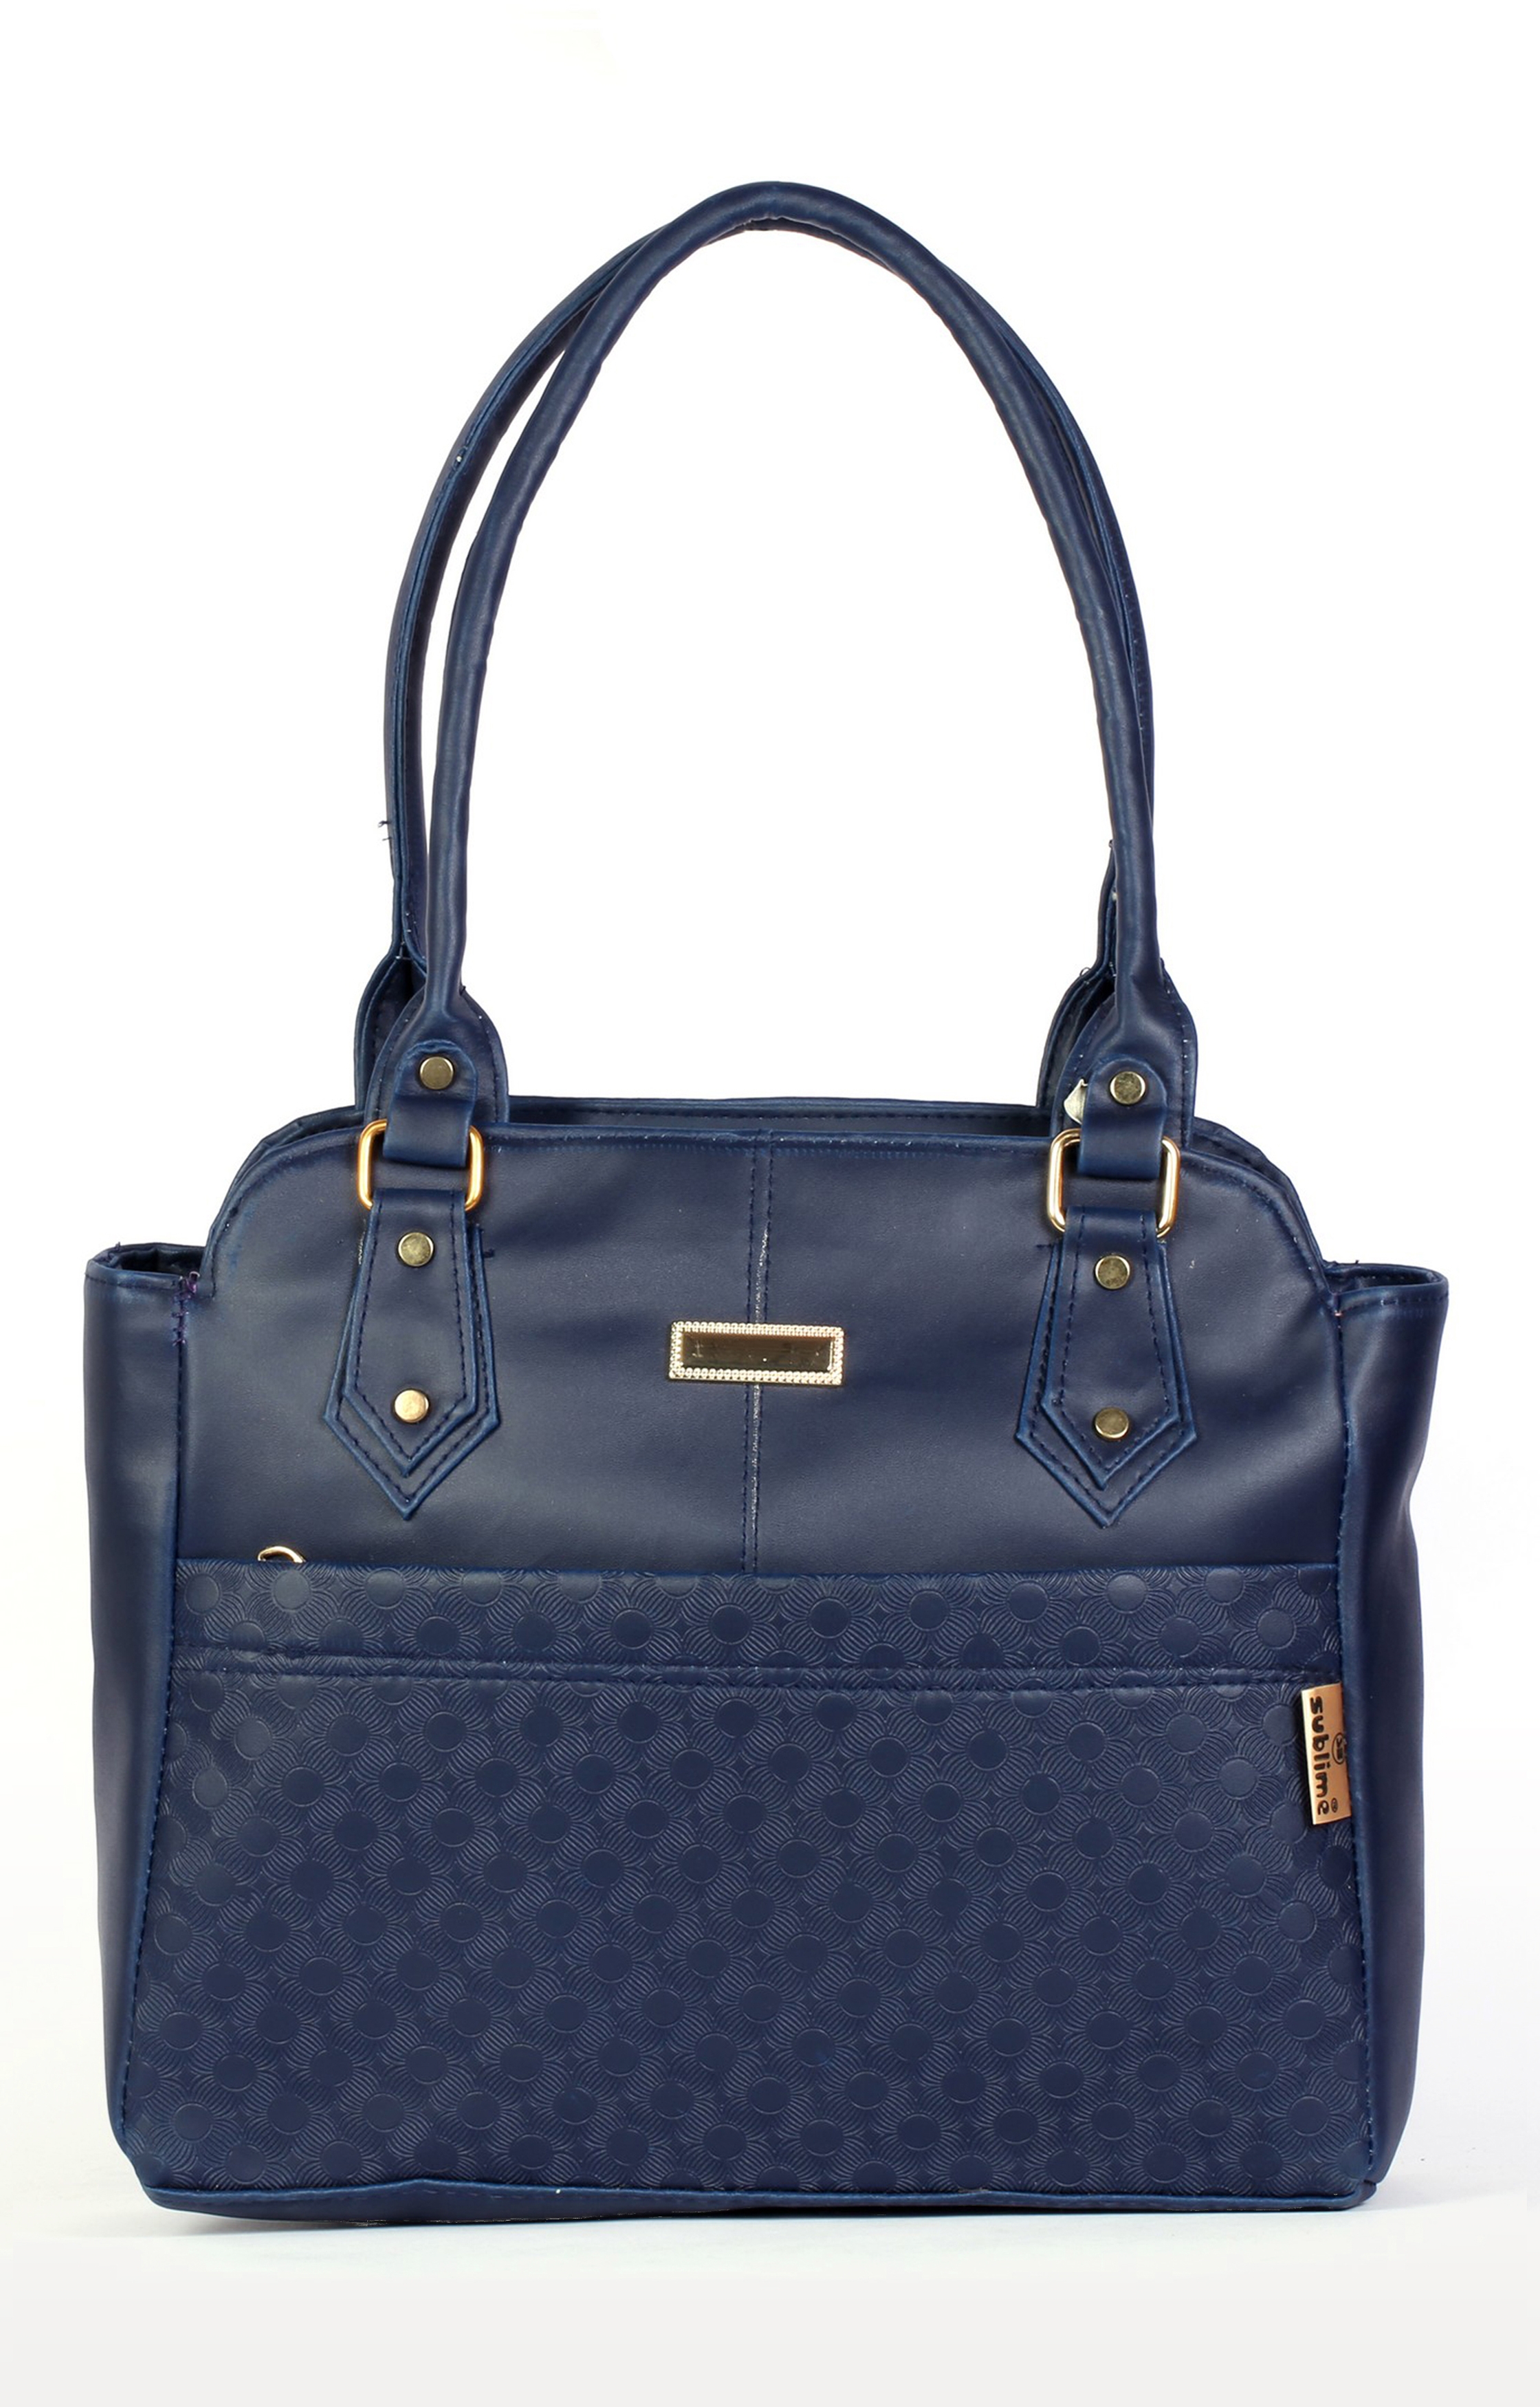 Lely's Women's Stylish Handbag For Office Use (Blue)